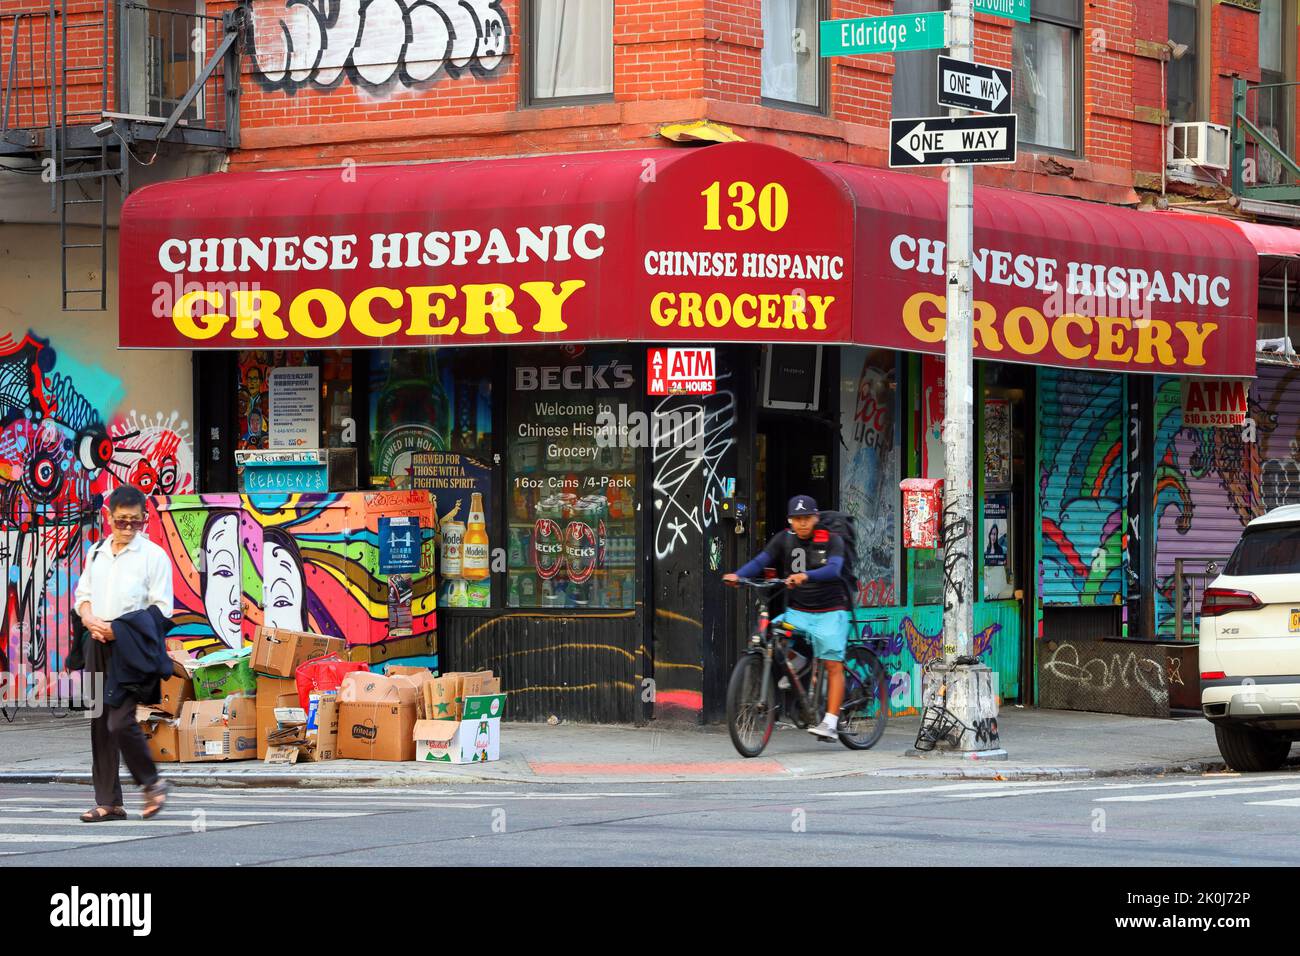 Chinese Hispanic Grocery, 130 Eldridge St, New York, NYC foto di una bodega nel Lower East Side/Chinatown di Manhattan Foto Stock